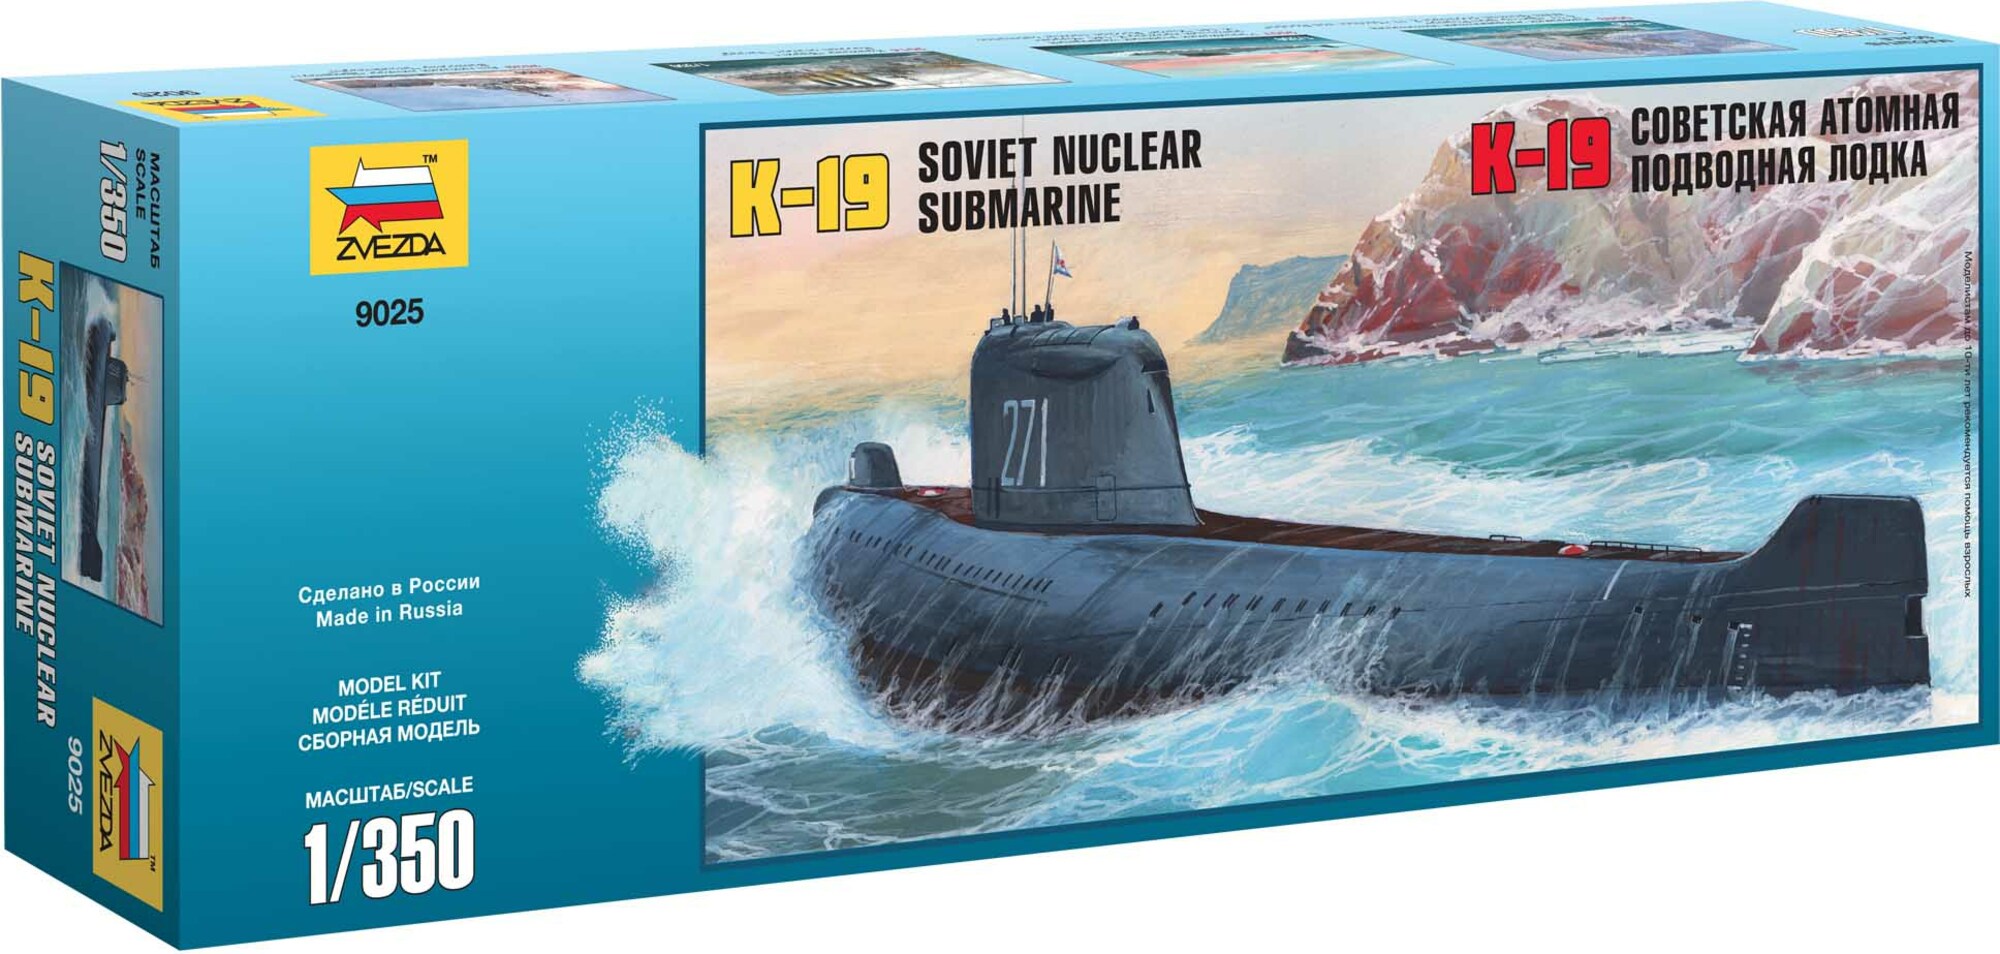 Model Kit ponorka 9025 - K-19 Soviet Nuclear Submarine "Hotel" Class (1: 350)